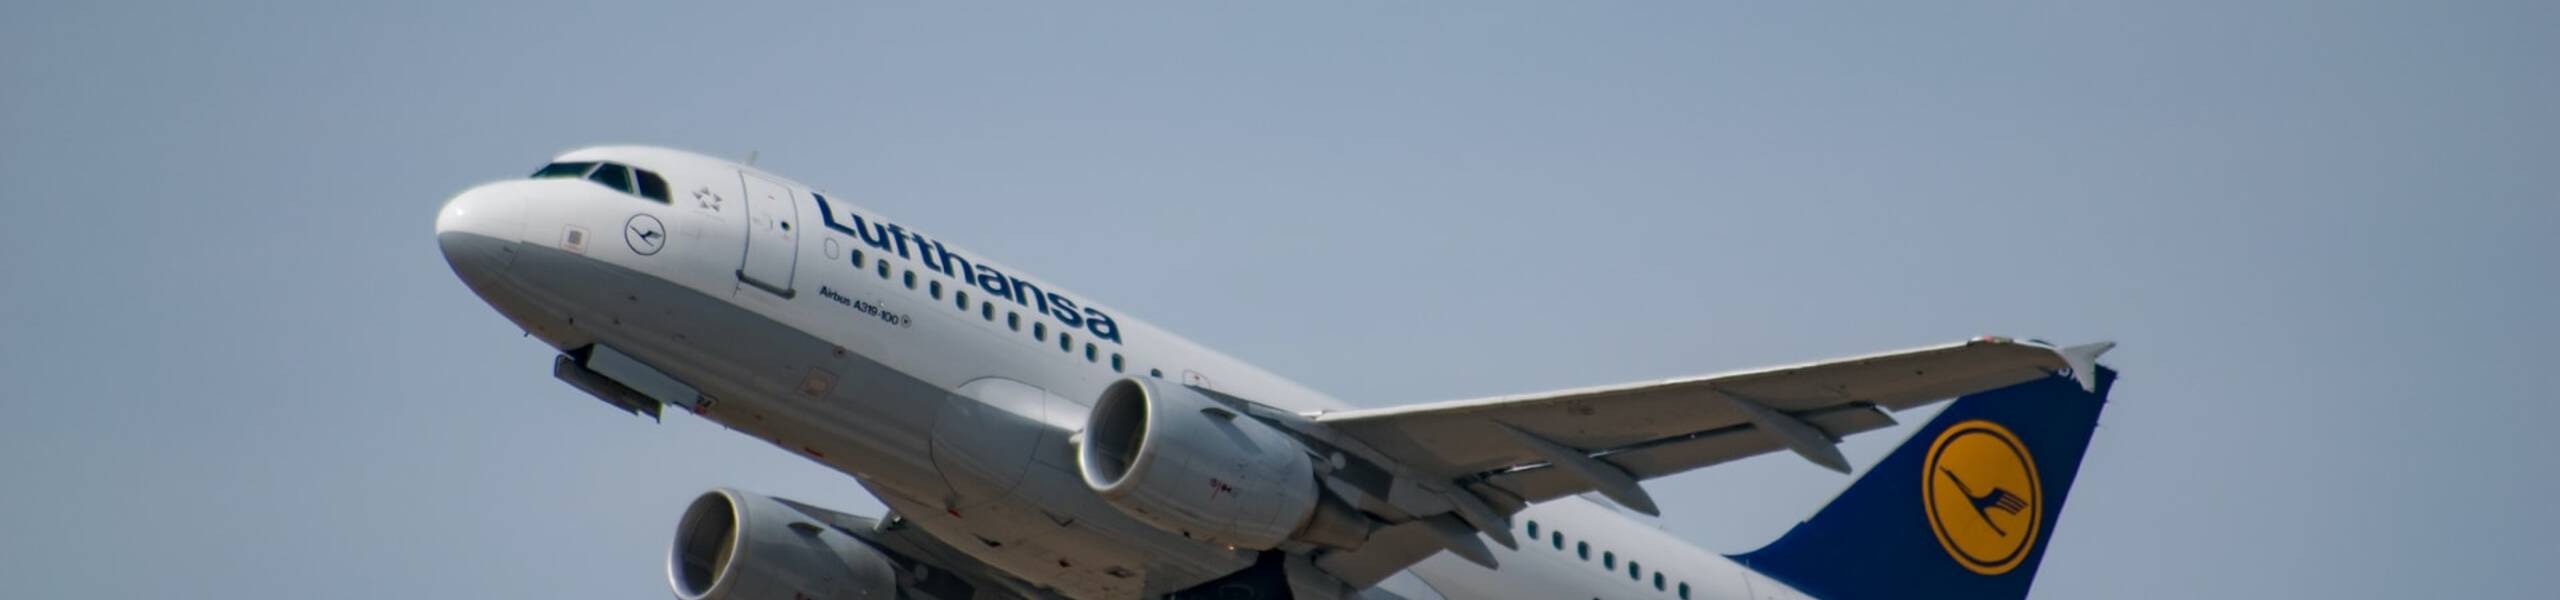 Lufthansa: Stocks Drop Ahead of Additional Issue